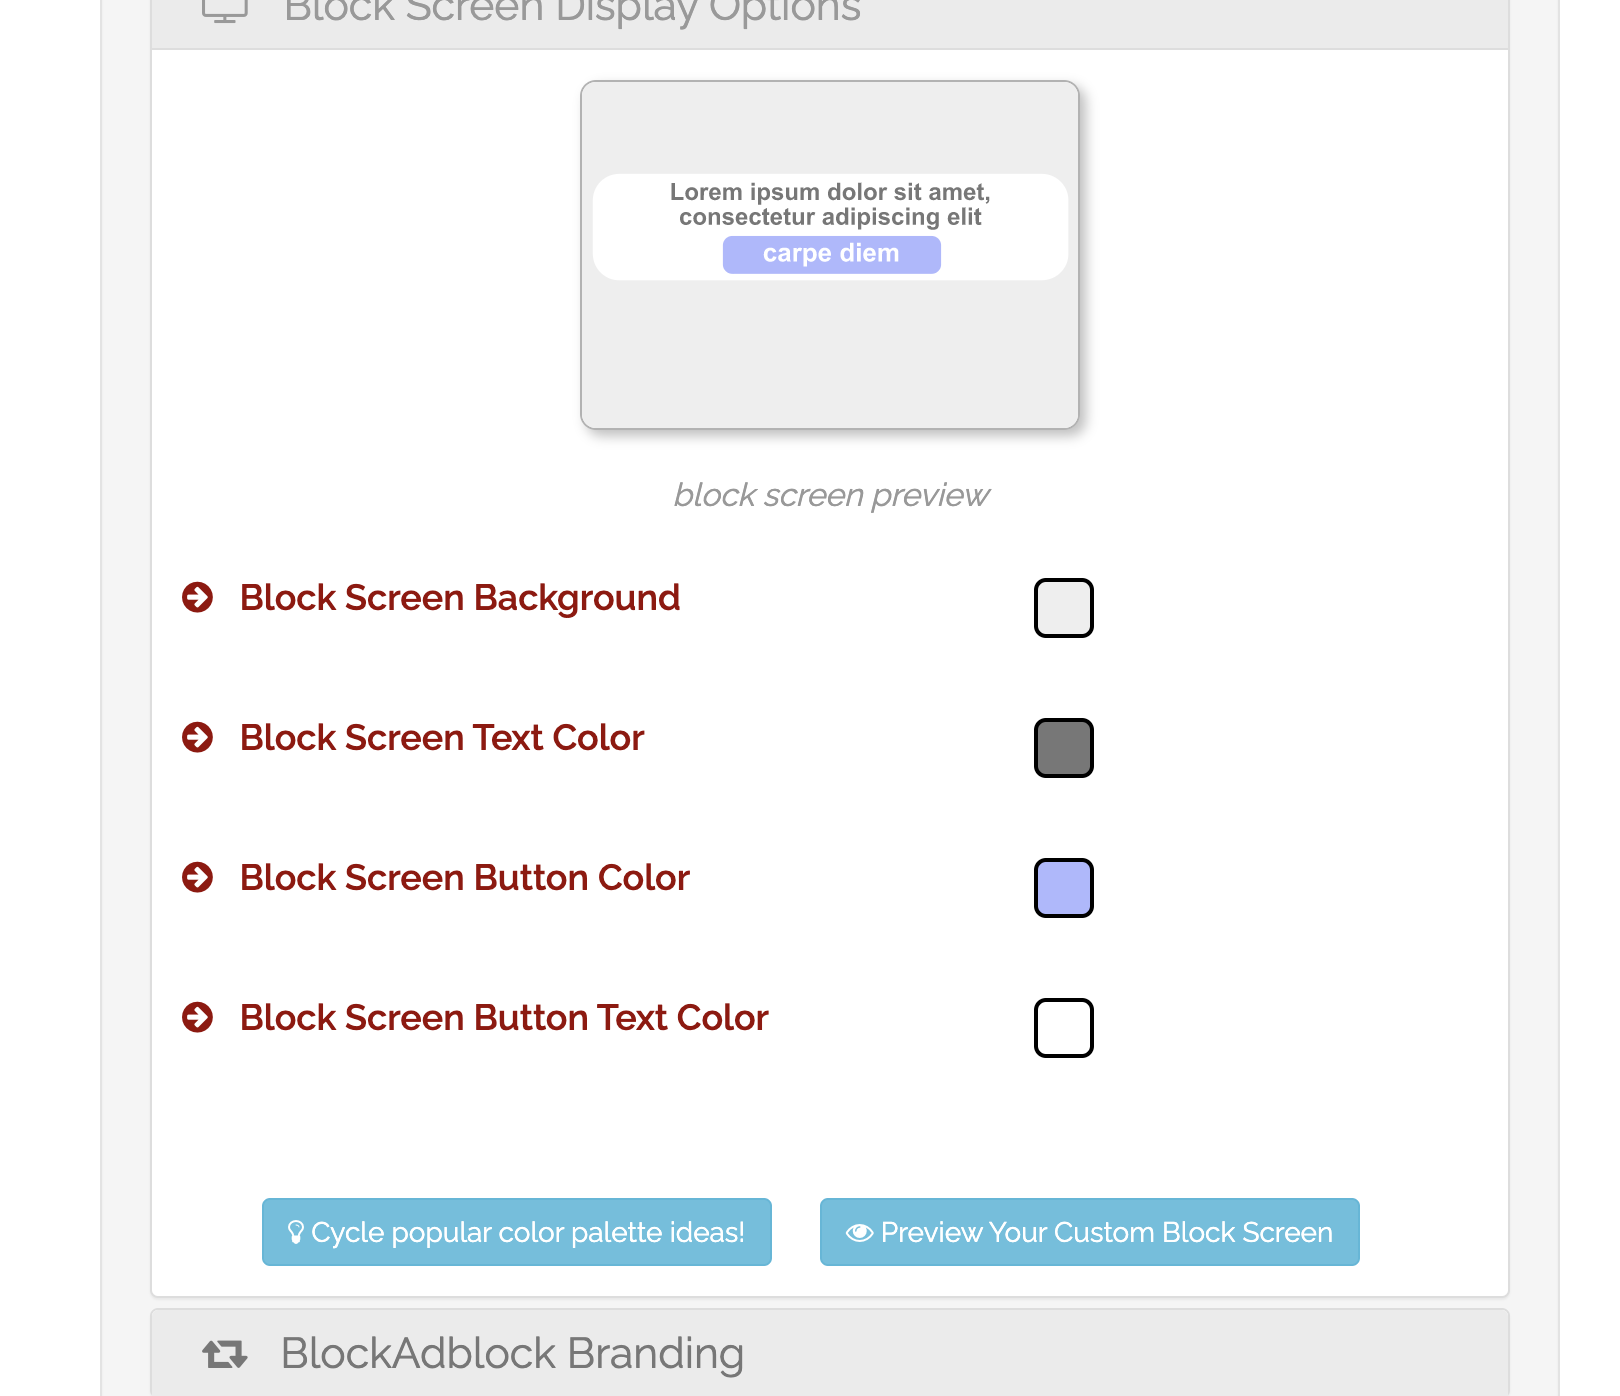 Block Screen Display Option